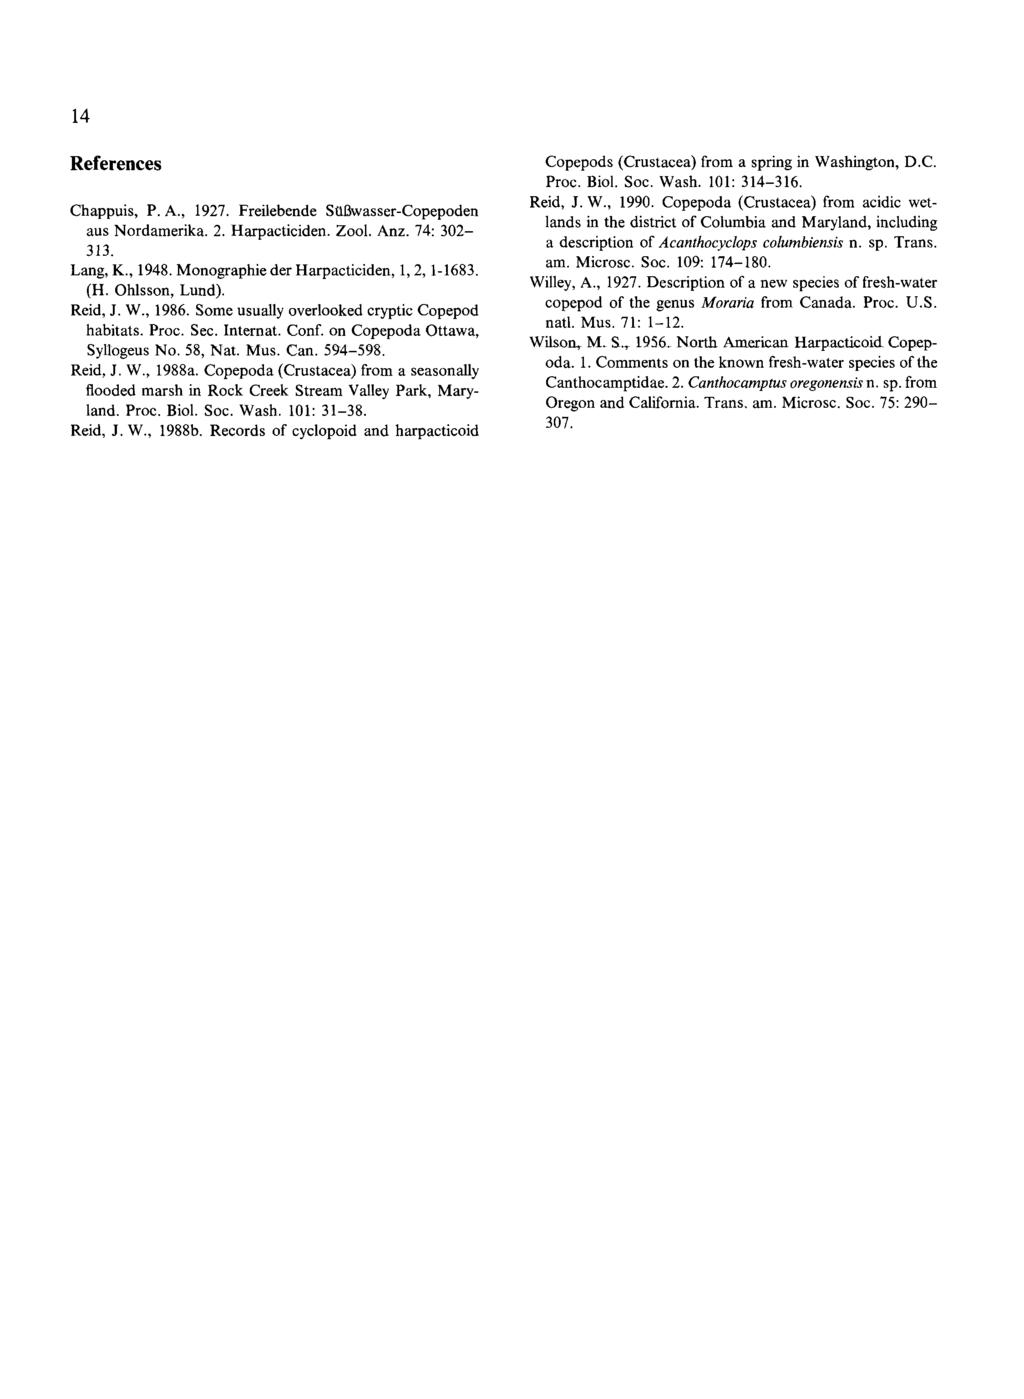 References Chappuis, P. A., 1927. Freilebende SUI3wasser-Copepoden aus Nordamerika. 2. Harpacticiden. Zool. Anz. 74: 302-313. Lang, K., 1948. Monographie der Harpacticiden, 1,2, 1-1683. (H.